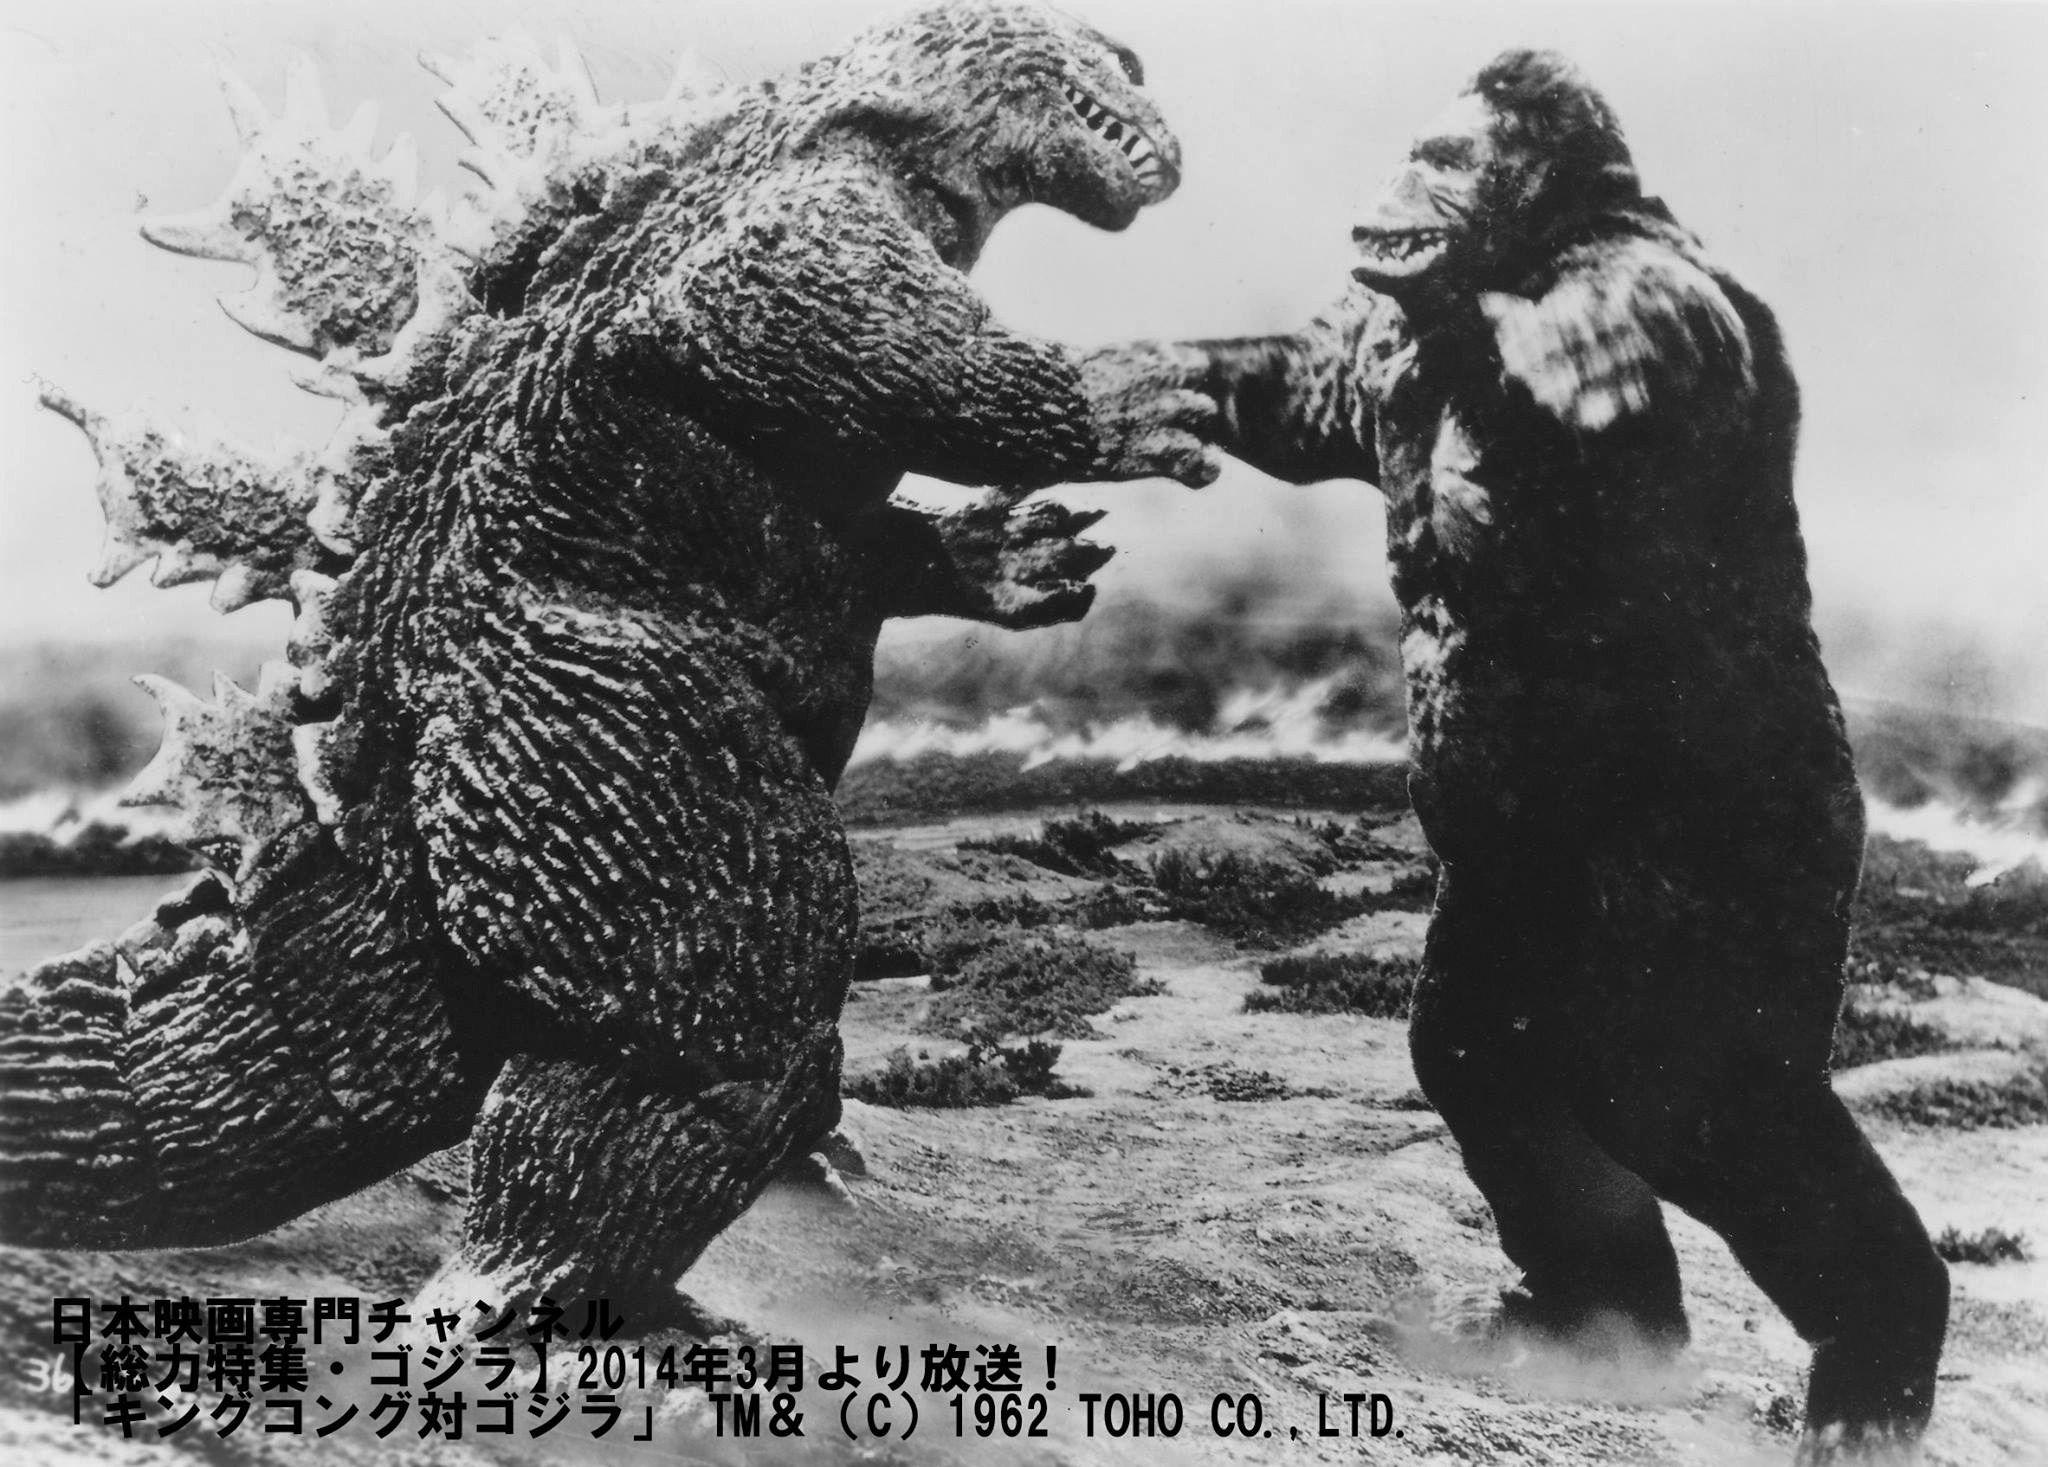 King Kong Vs. Godzilla HD Wallpaper. Background Imagex1467